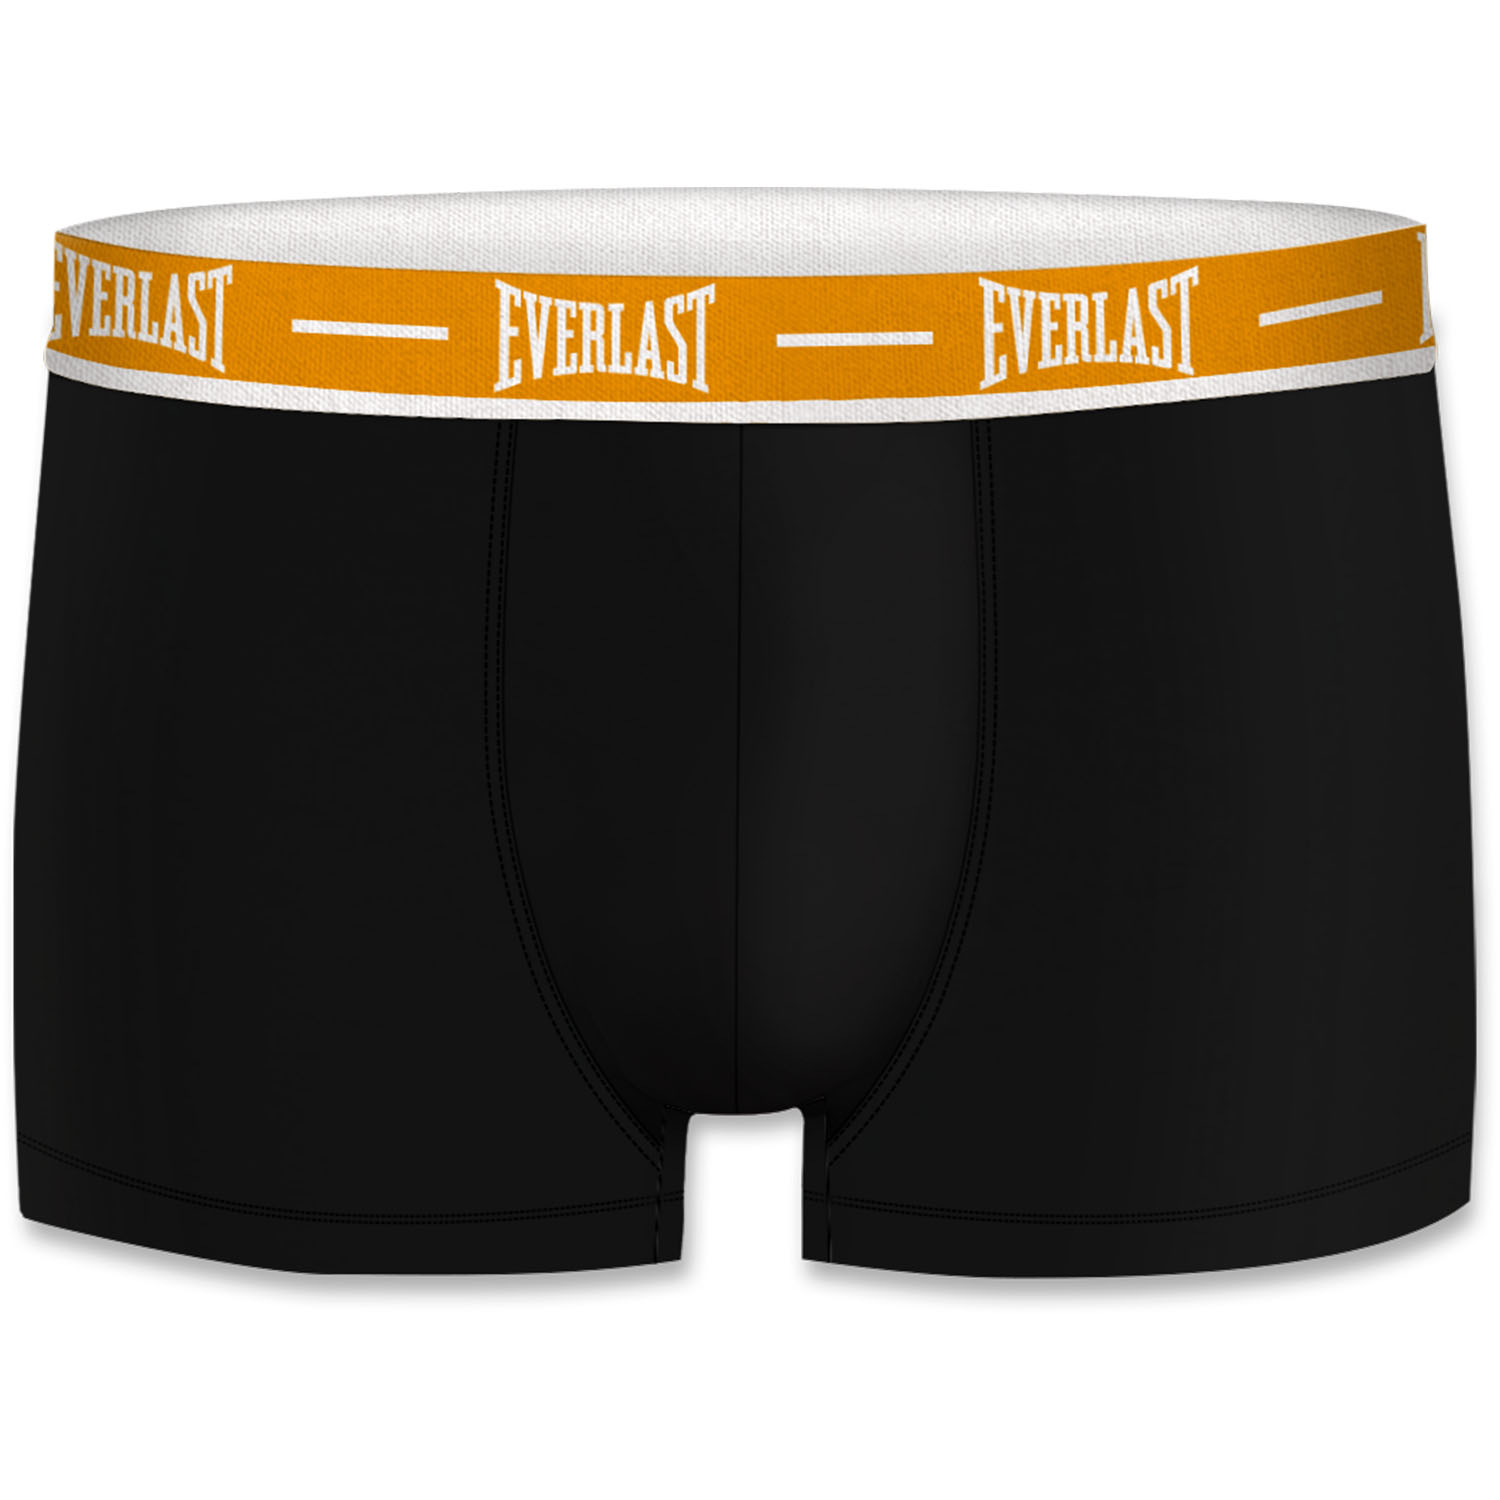 Everlast Boxershorts, AS2, black-orange, XXL